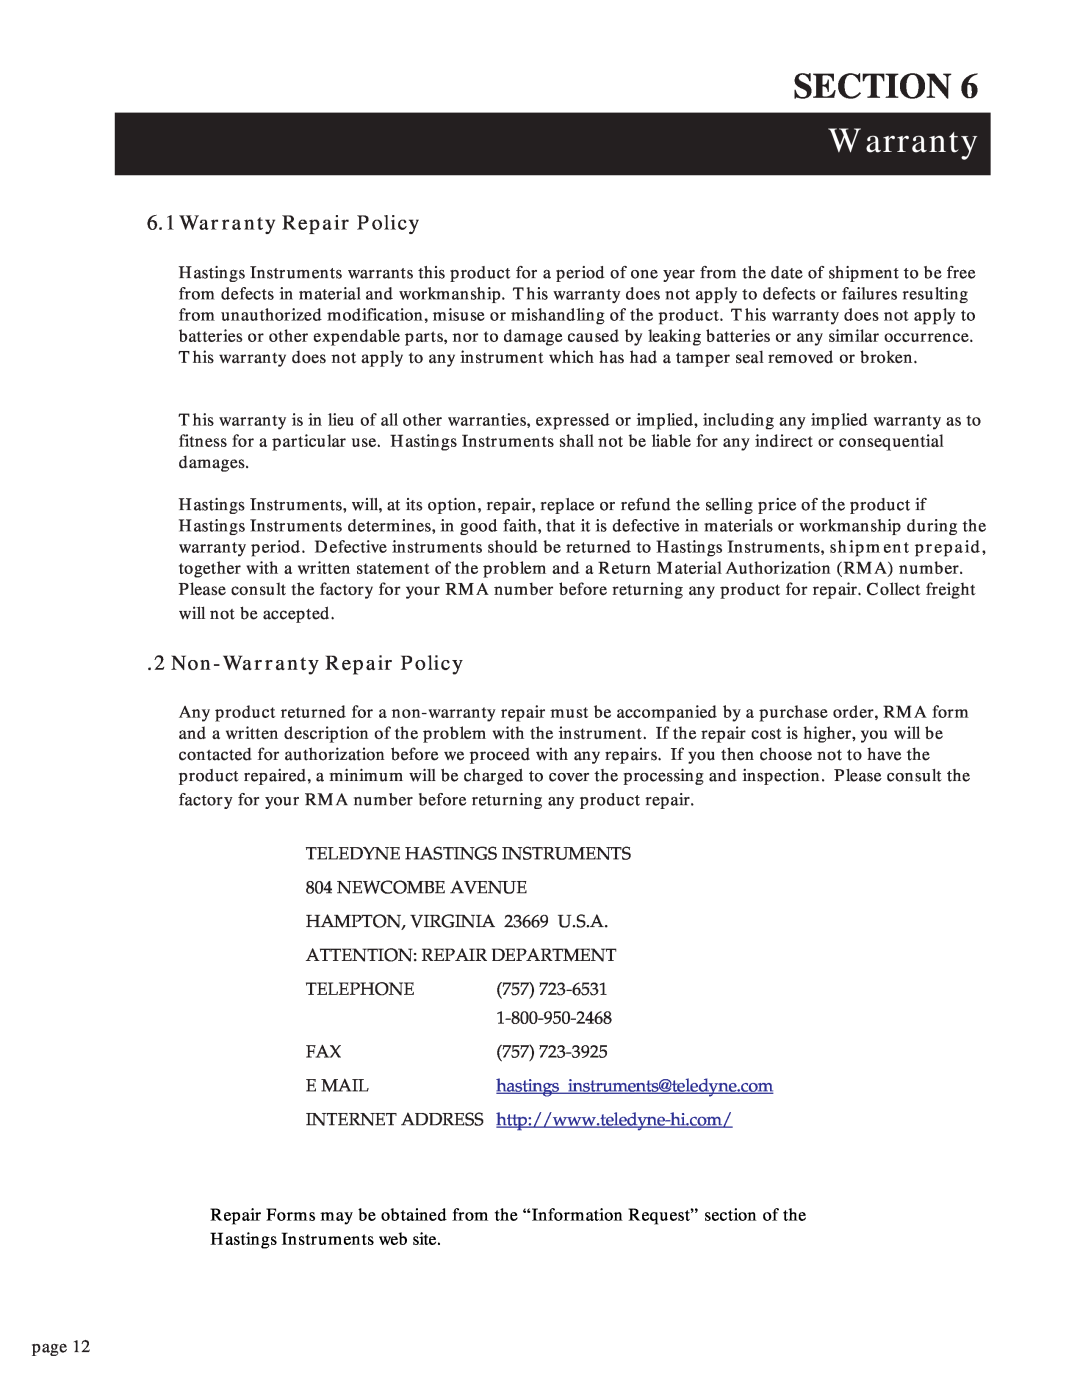 Teledyne DNV-33D instruction manual Warranty Repair Policy, Non-WarrantyRepair Policy, Section 